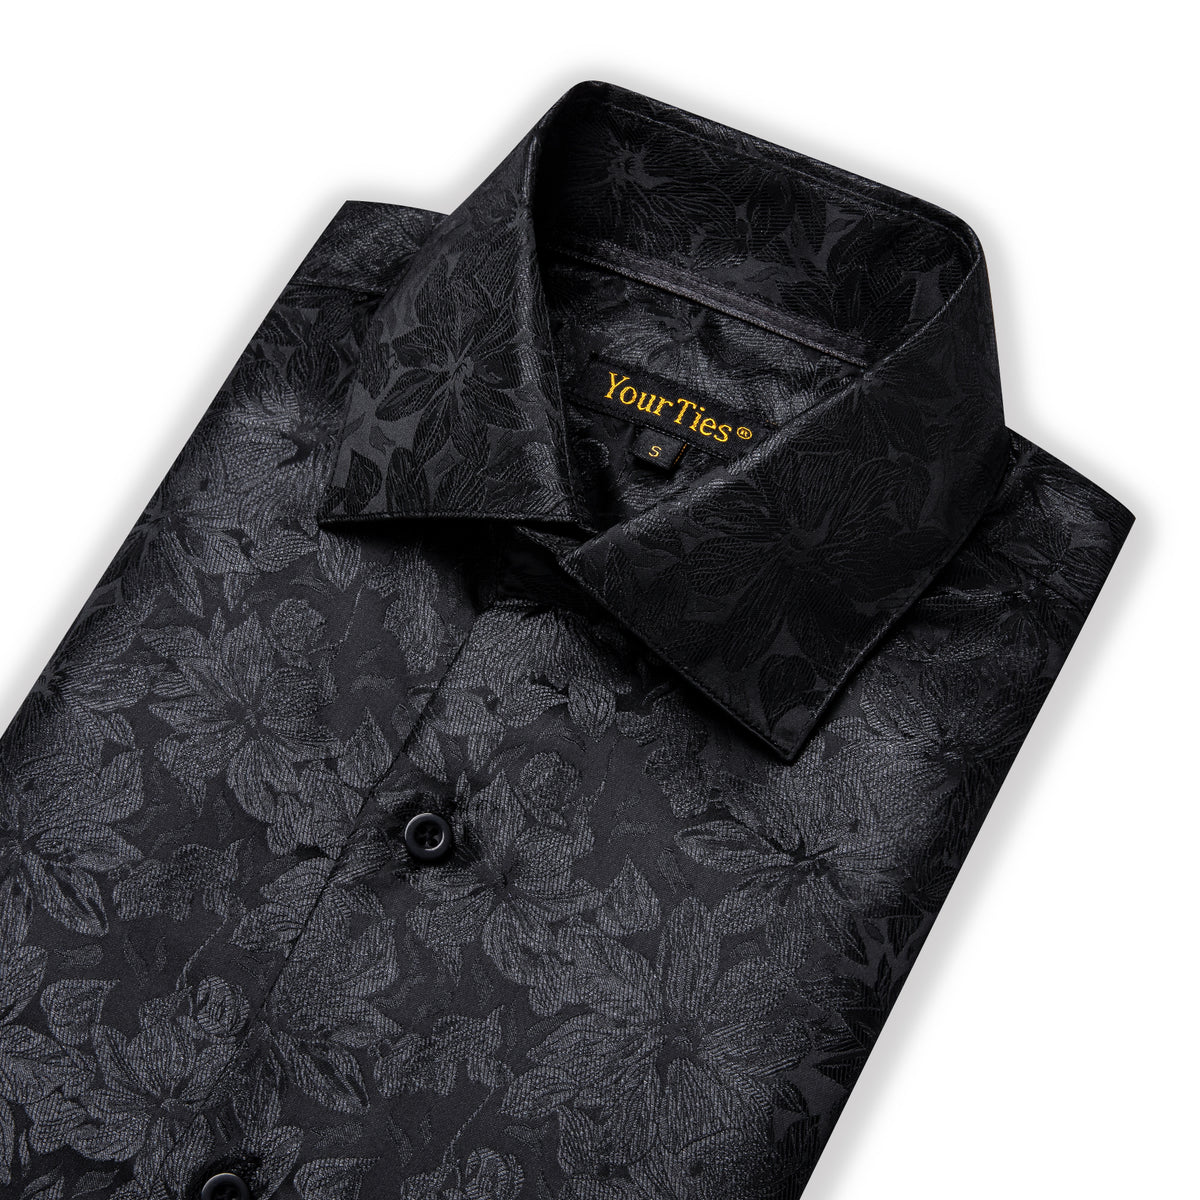 Black Floral Men's Long Sleeve Shirt